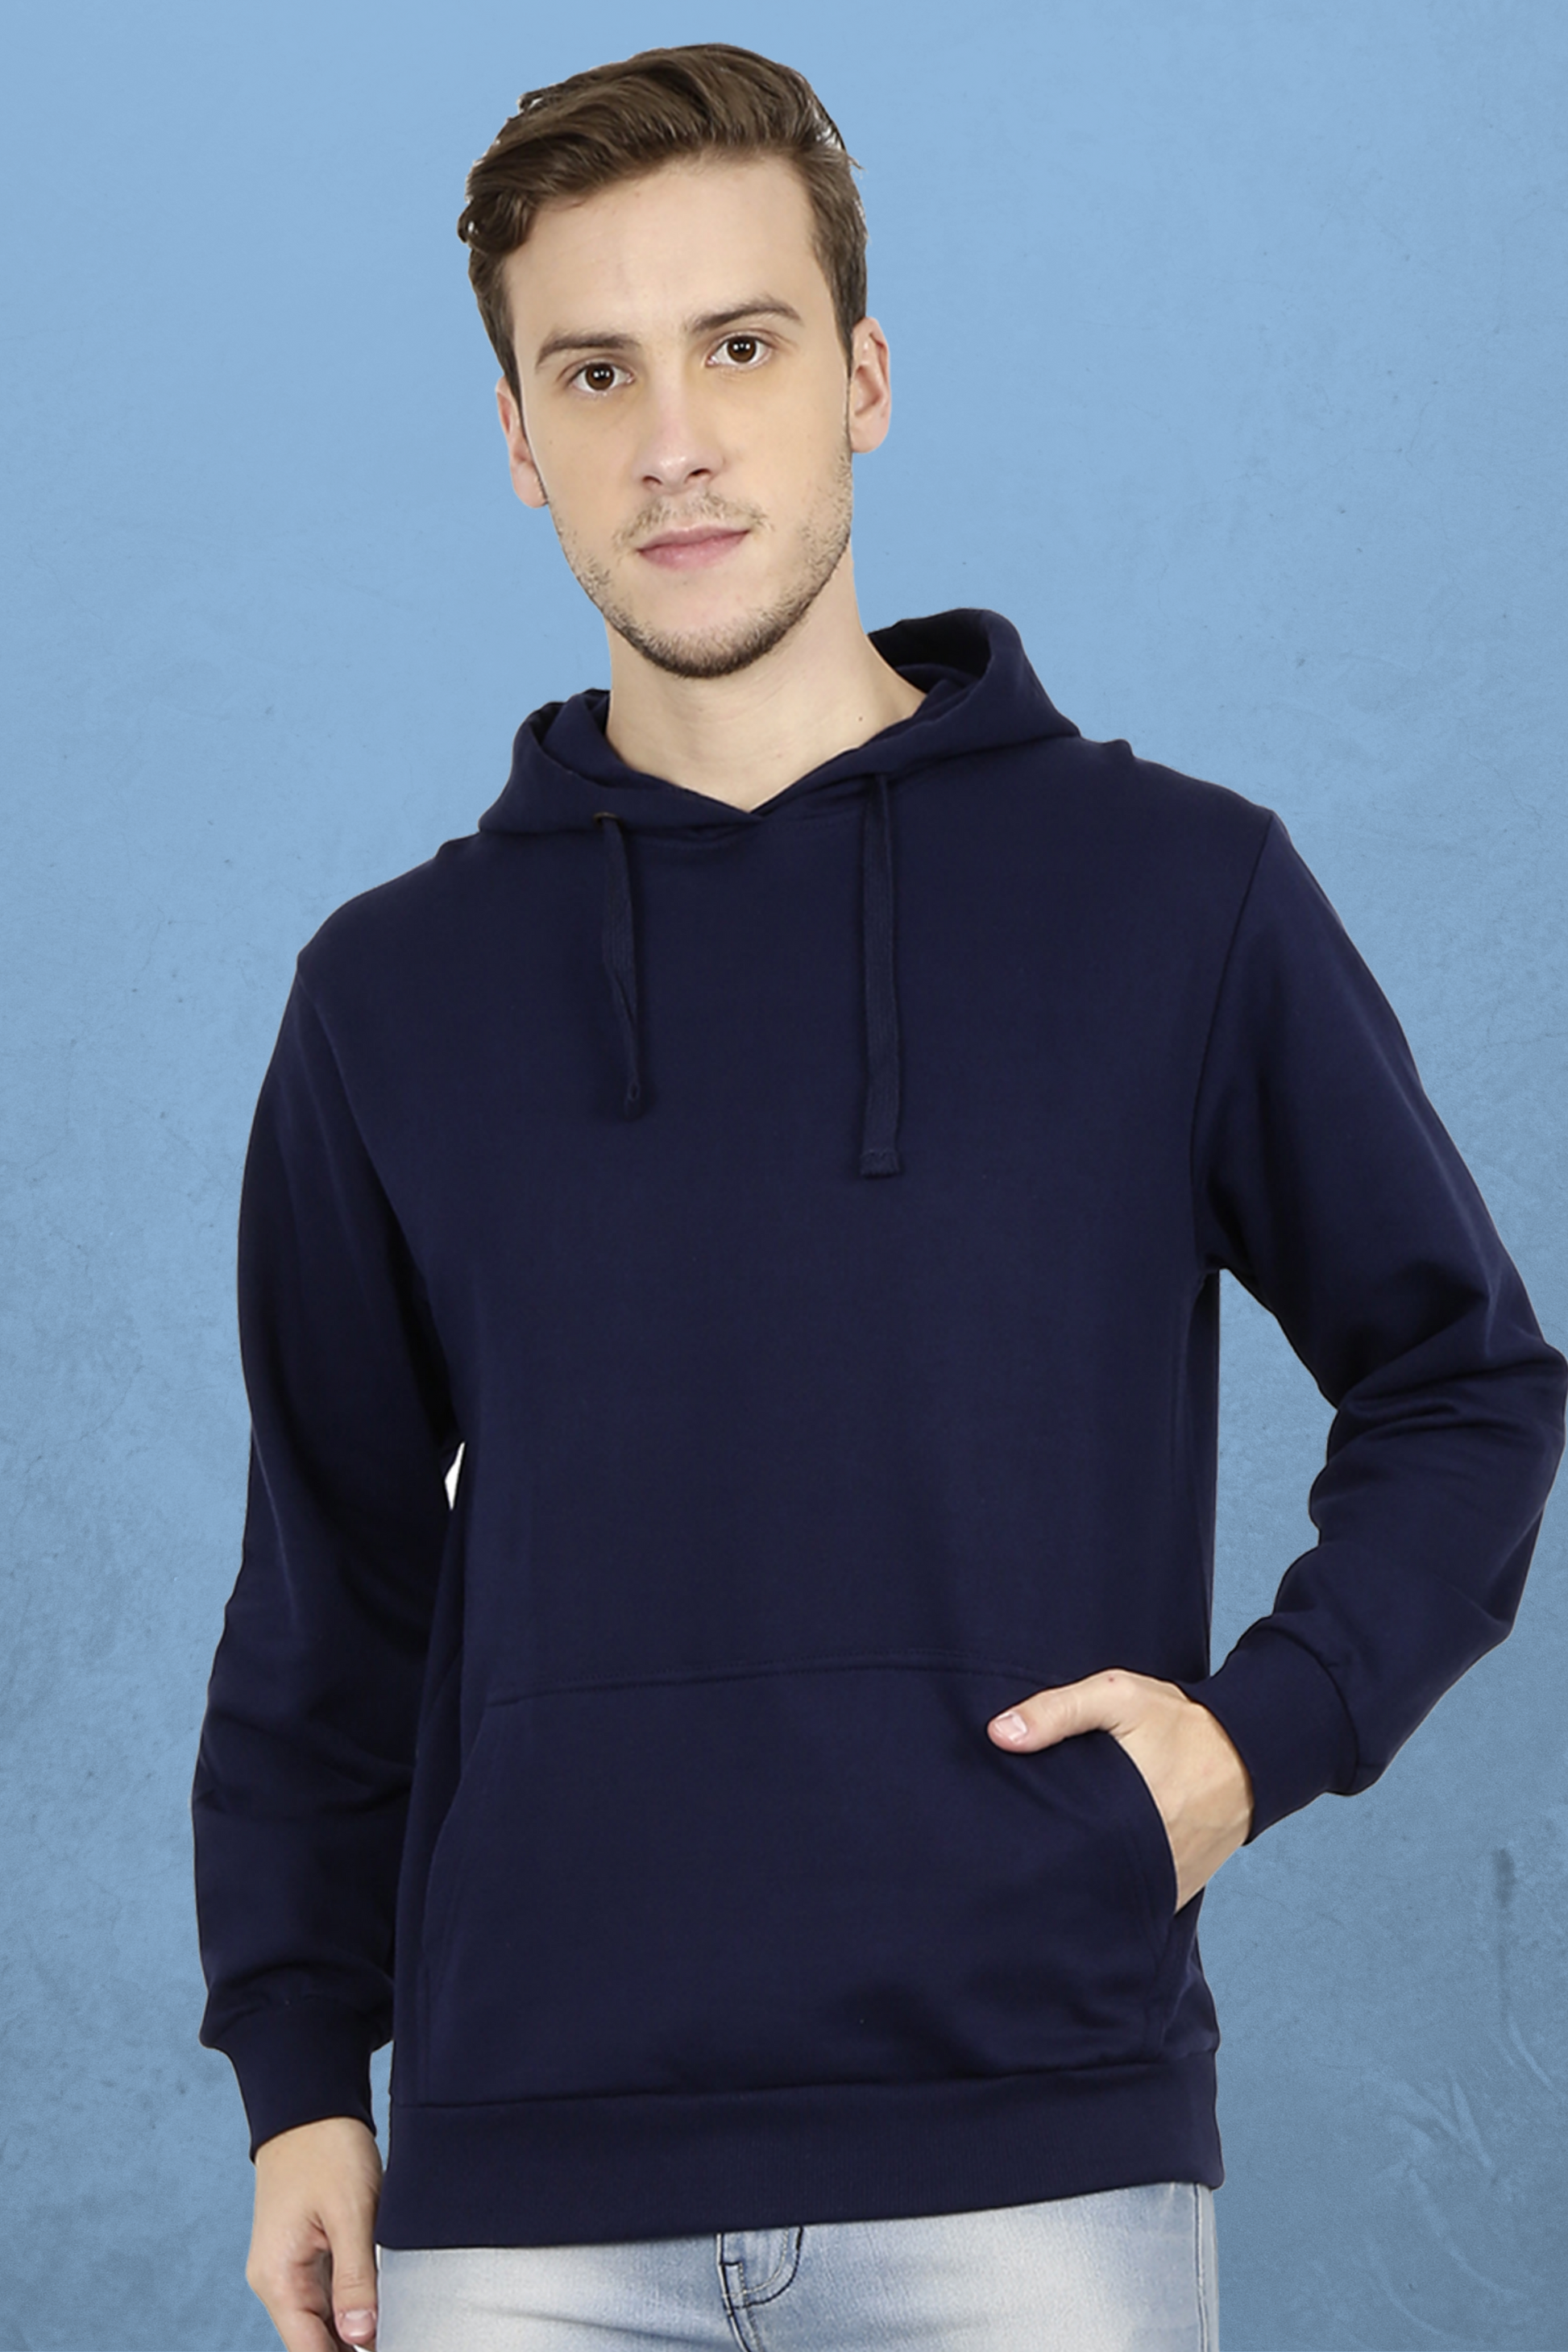 blue plain hoodies for men